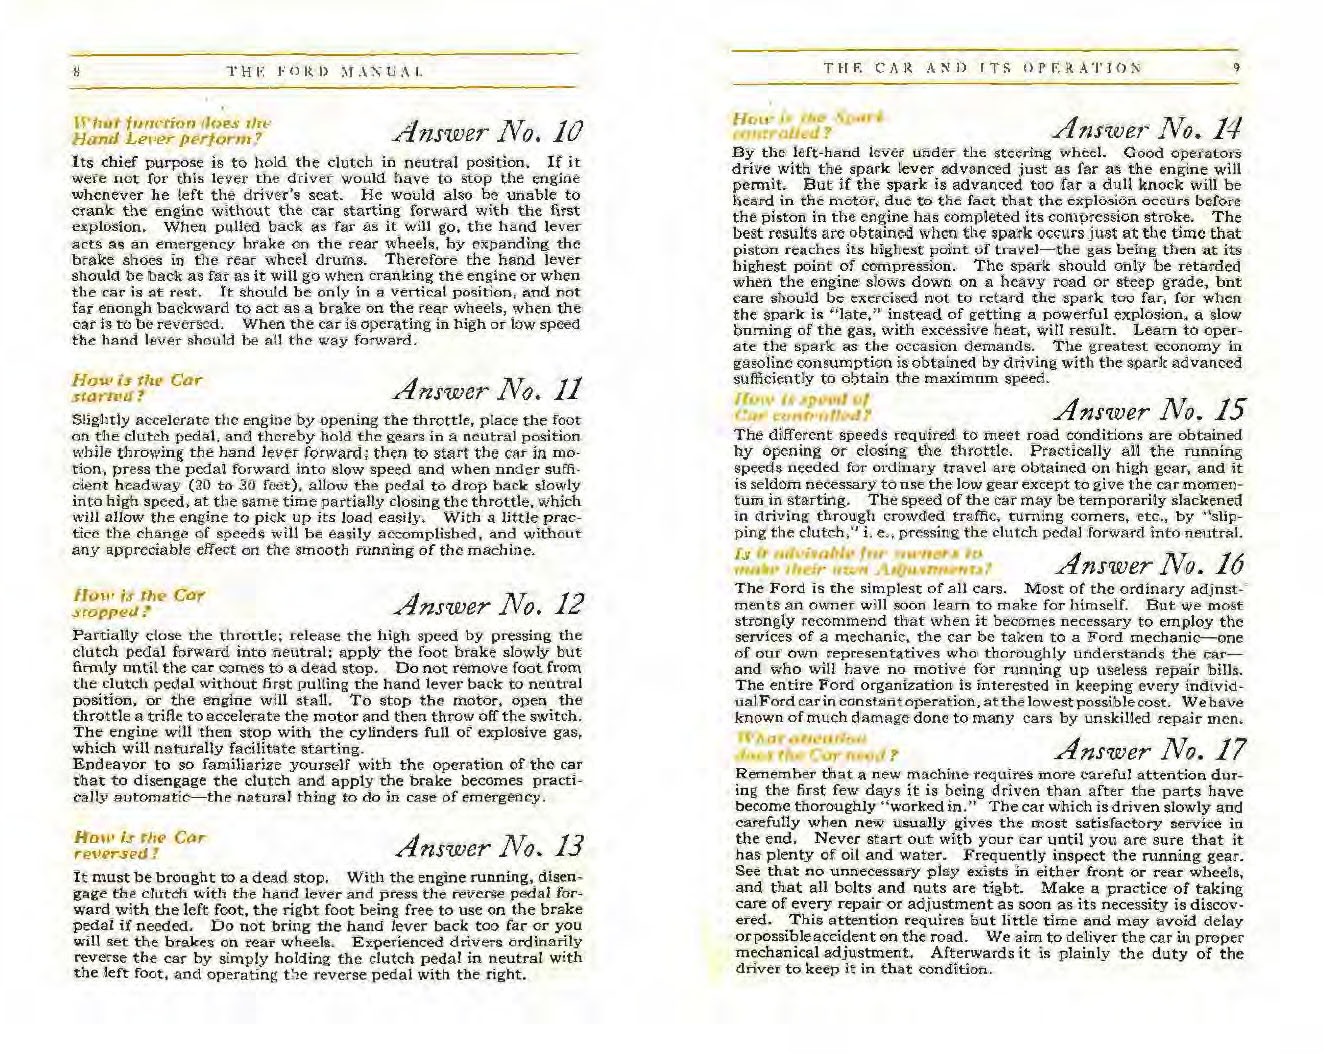 n_1917 Ford Owners Manual-08-09.jpg